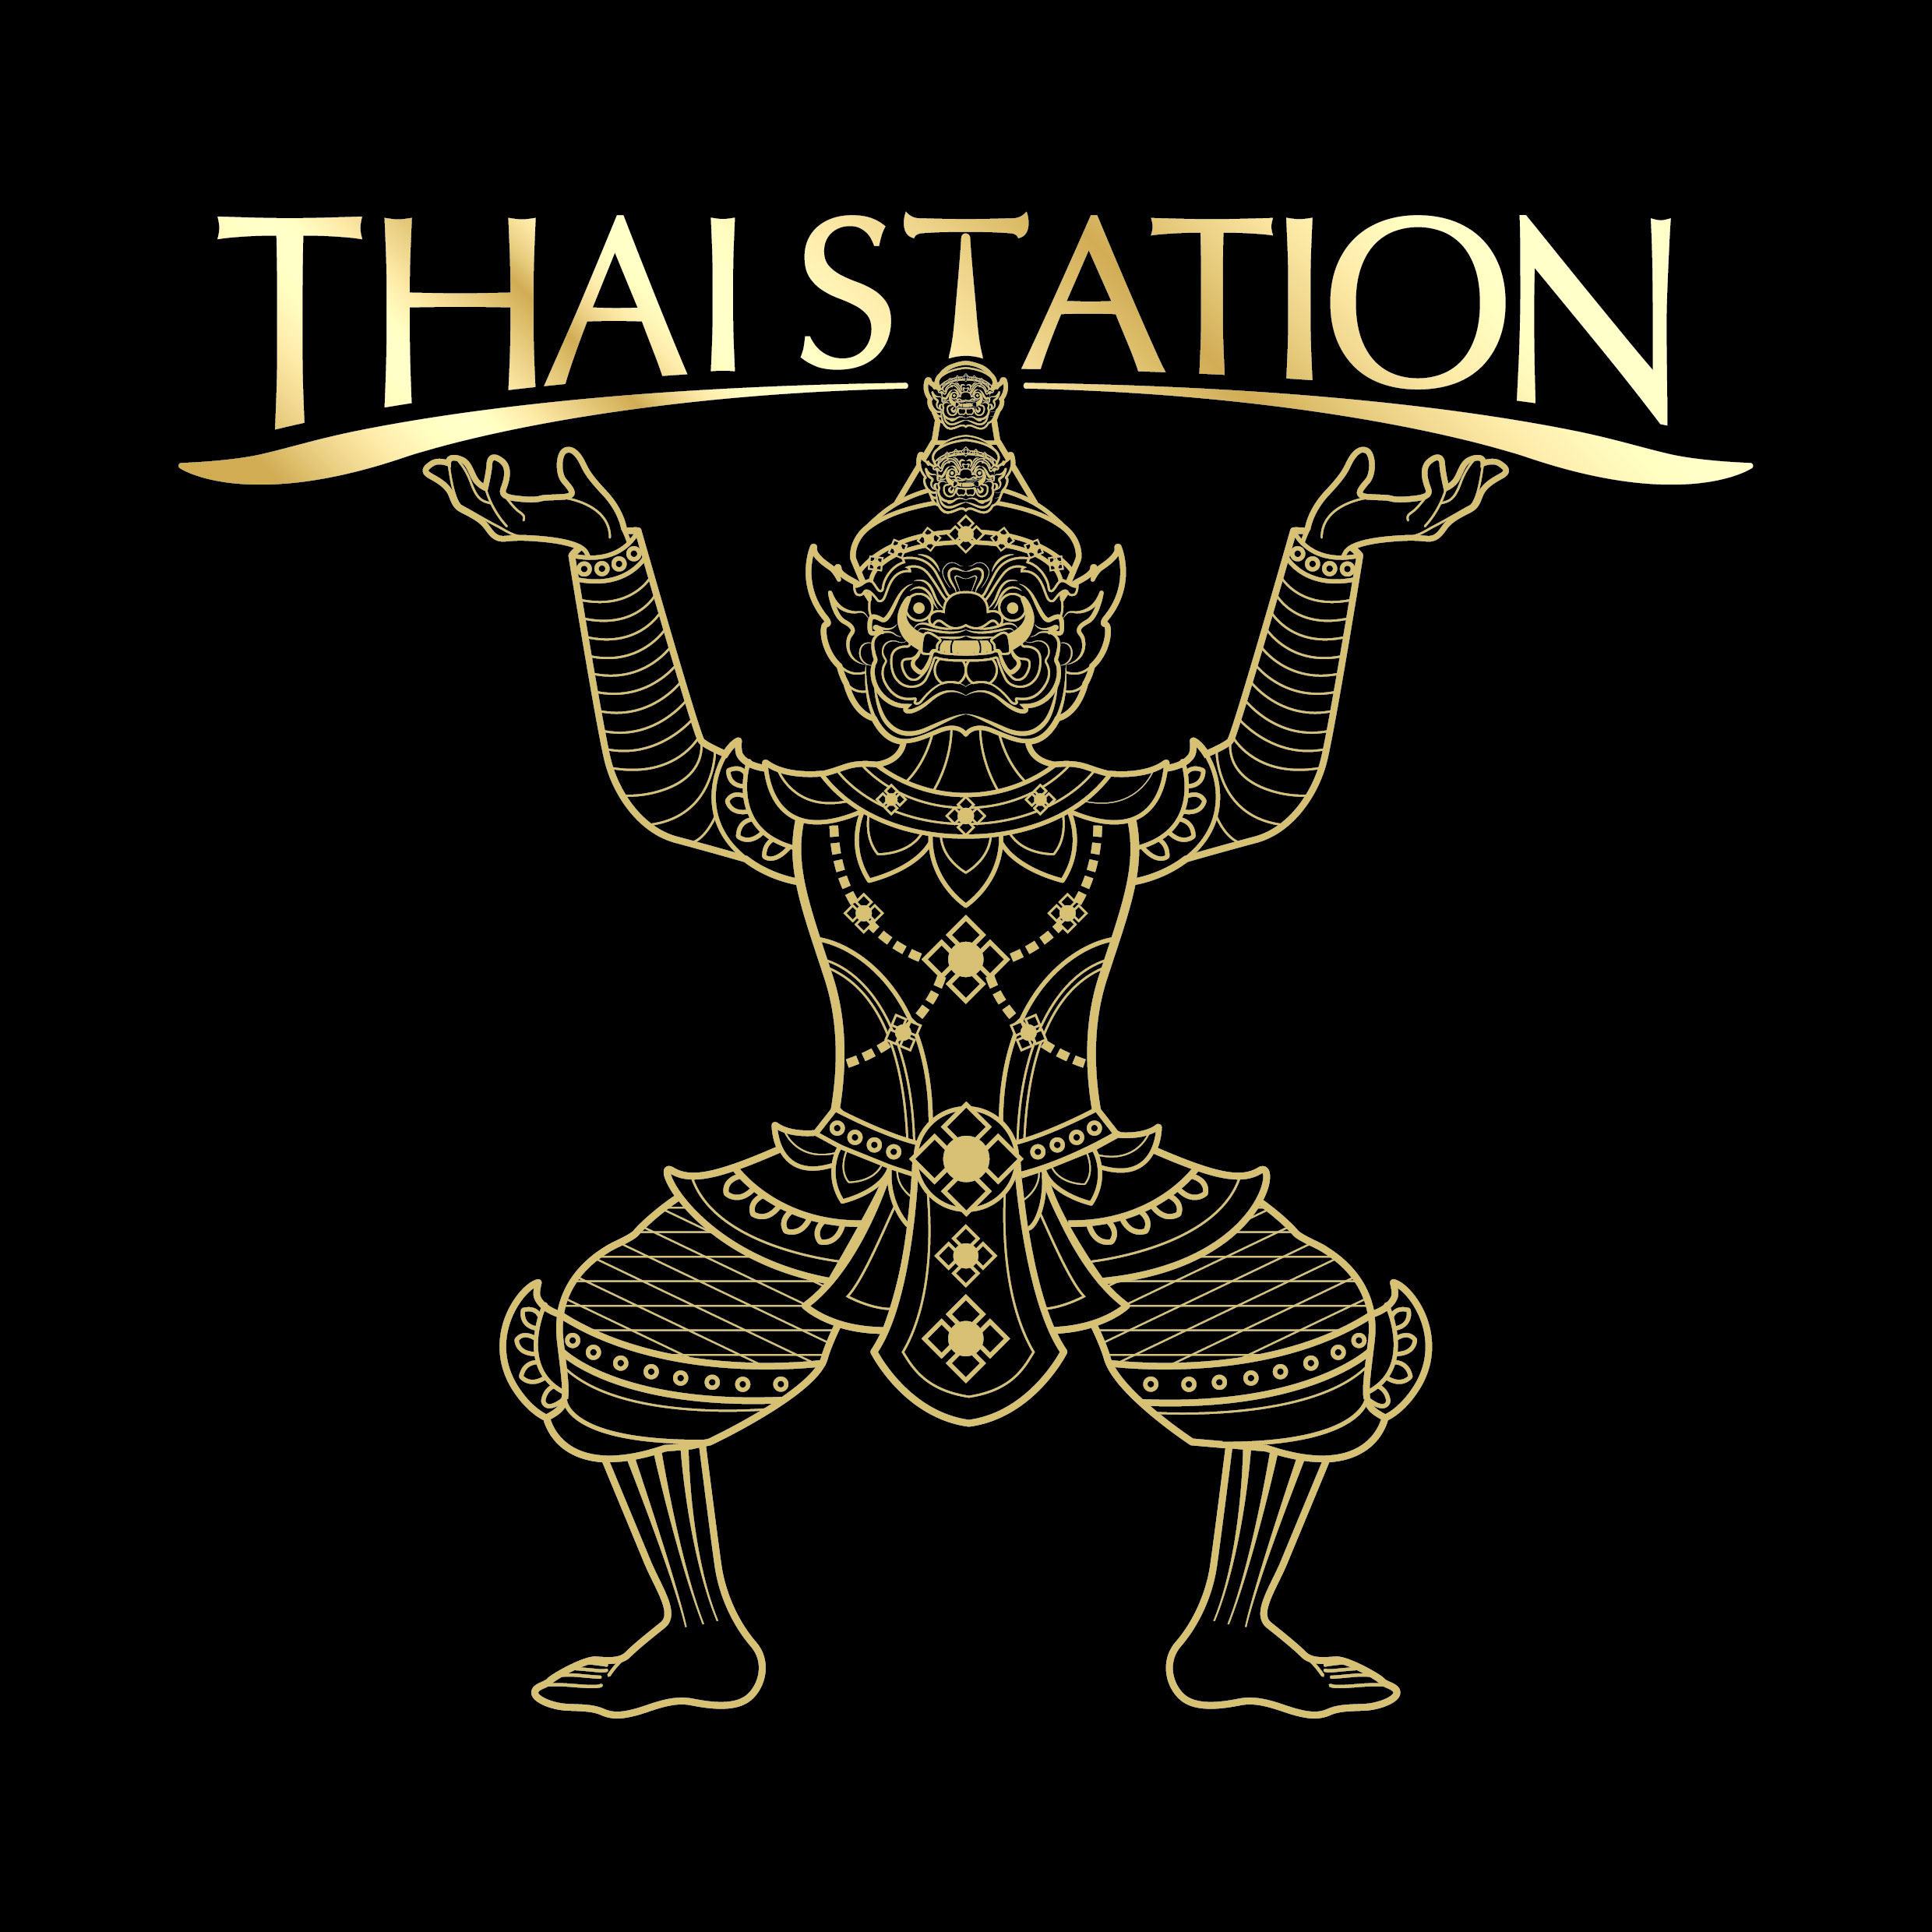 Thai Station Turnhout logo